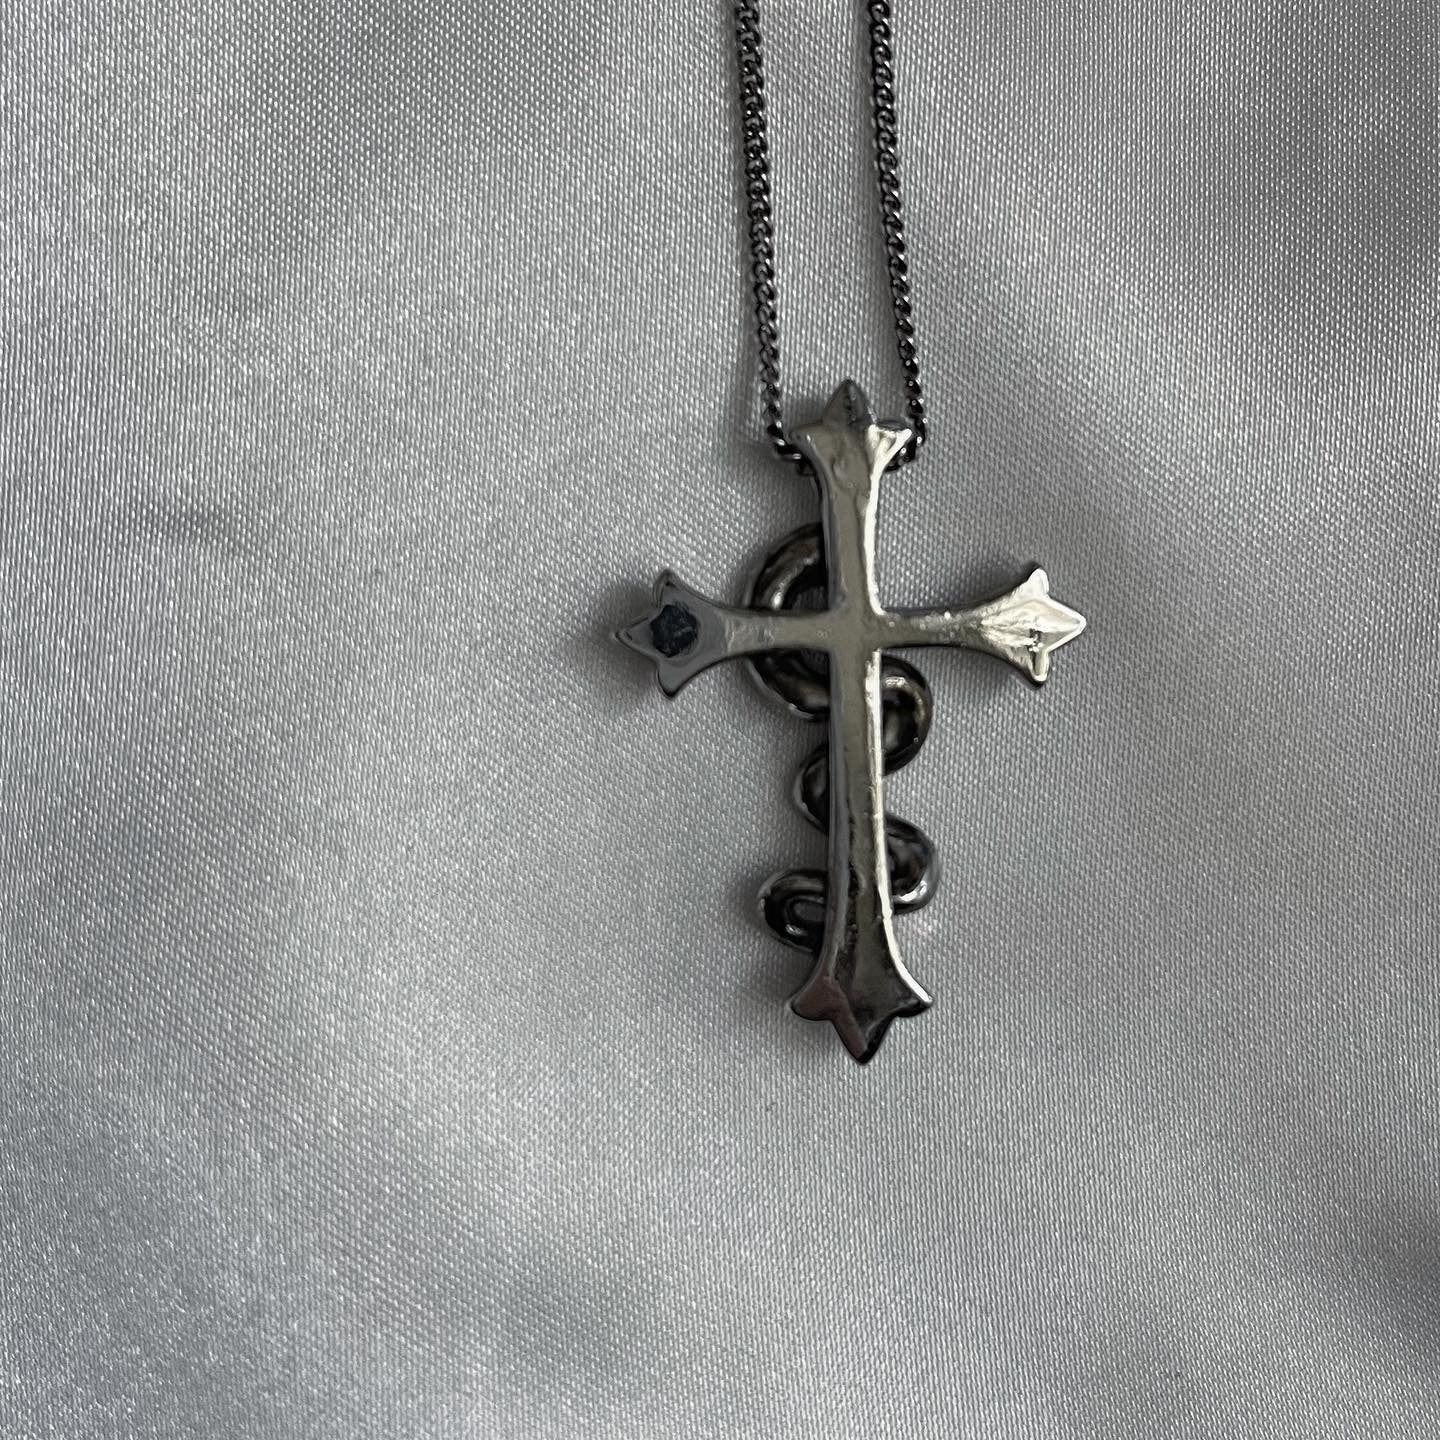 【再販】gibous cross snake necklace